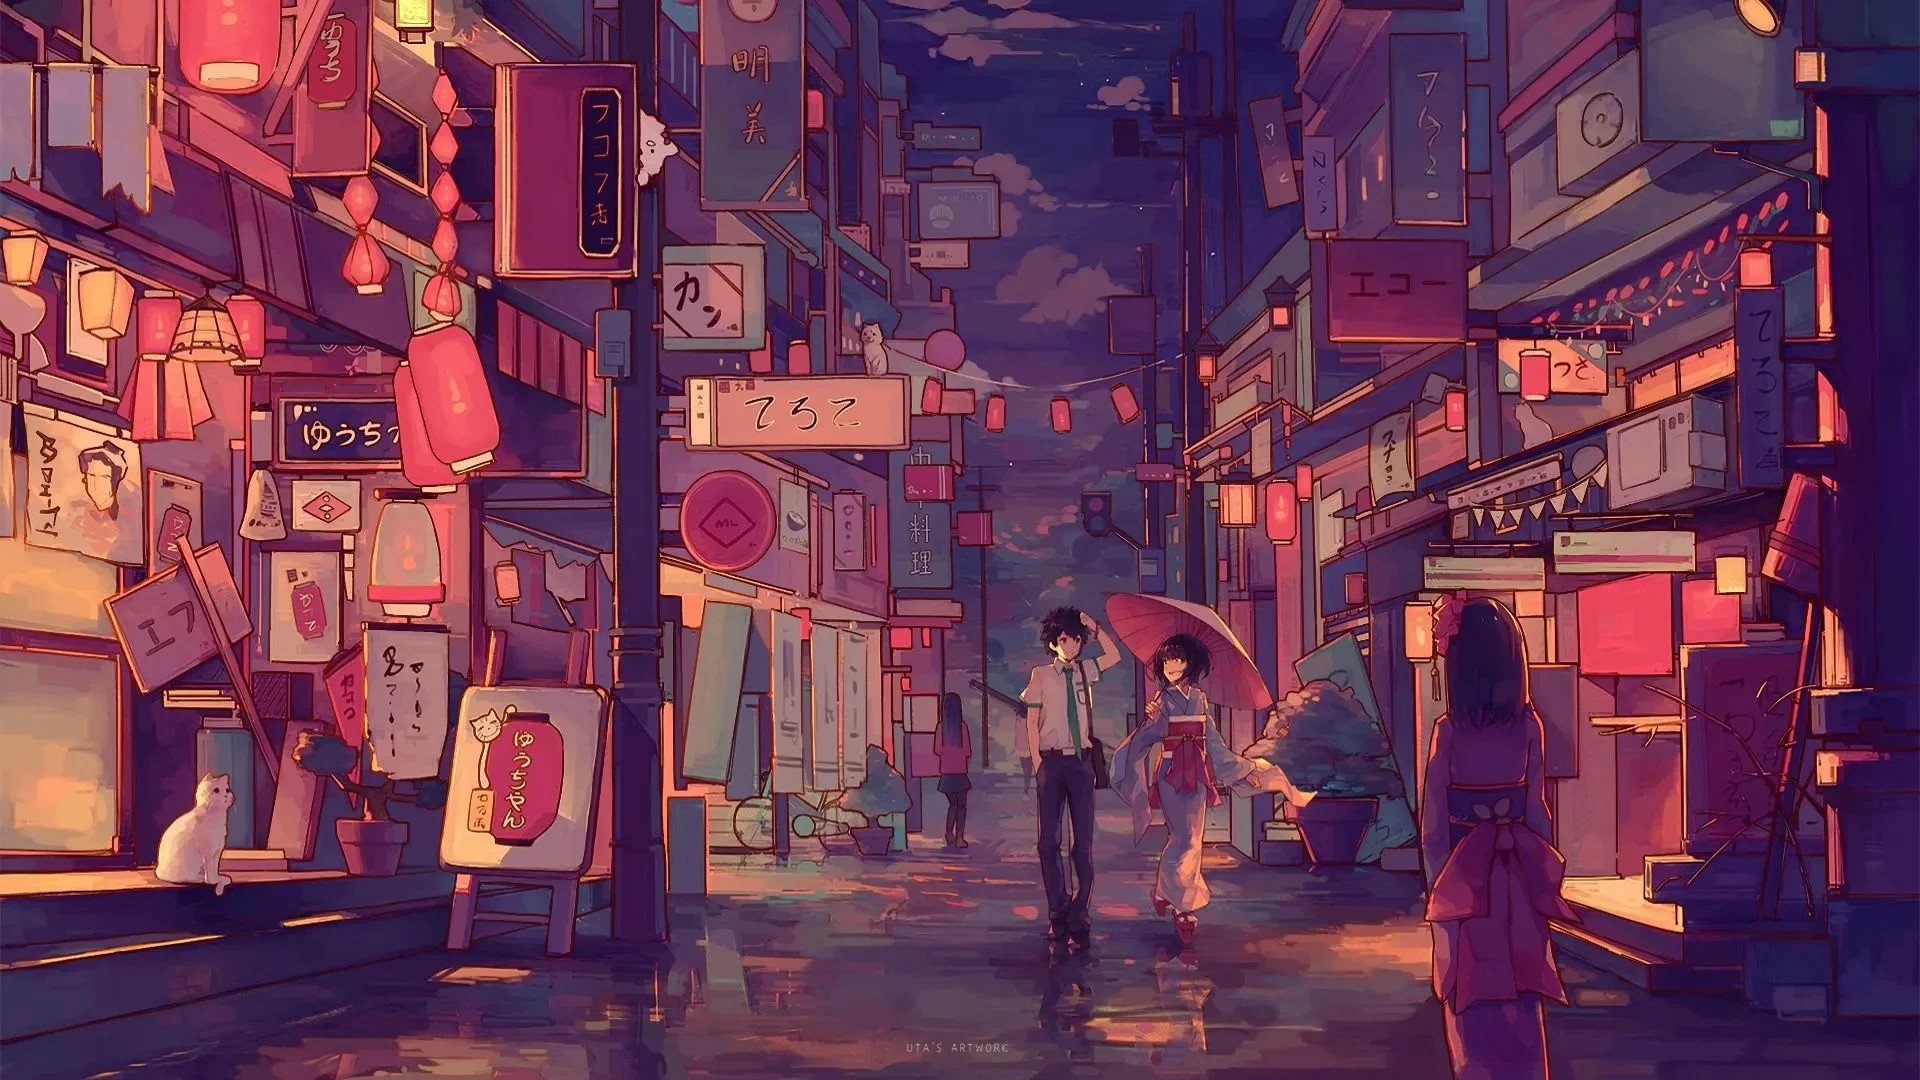 wallpaper for desktop, laptop  bl92-art-anime-japan-street-cute